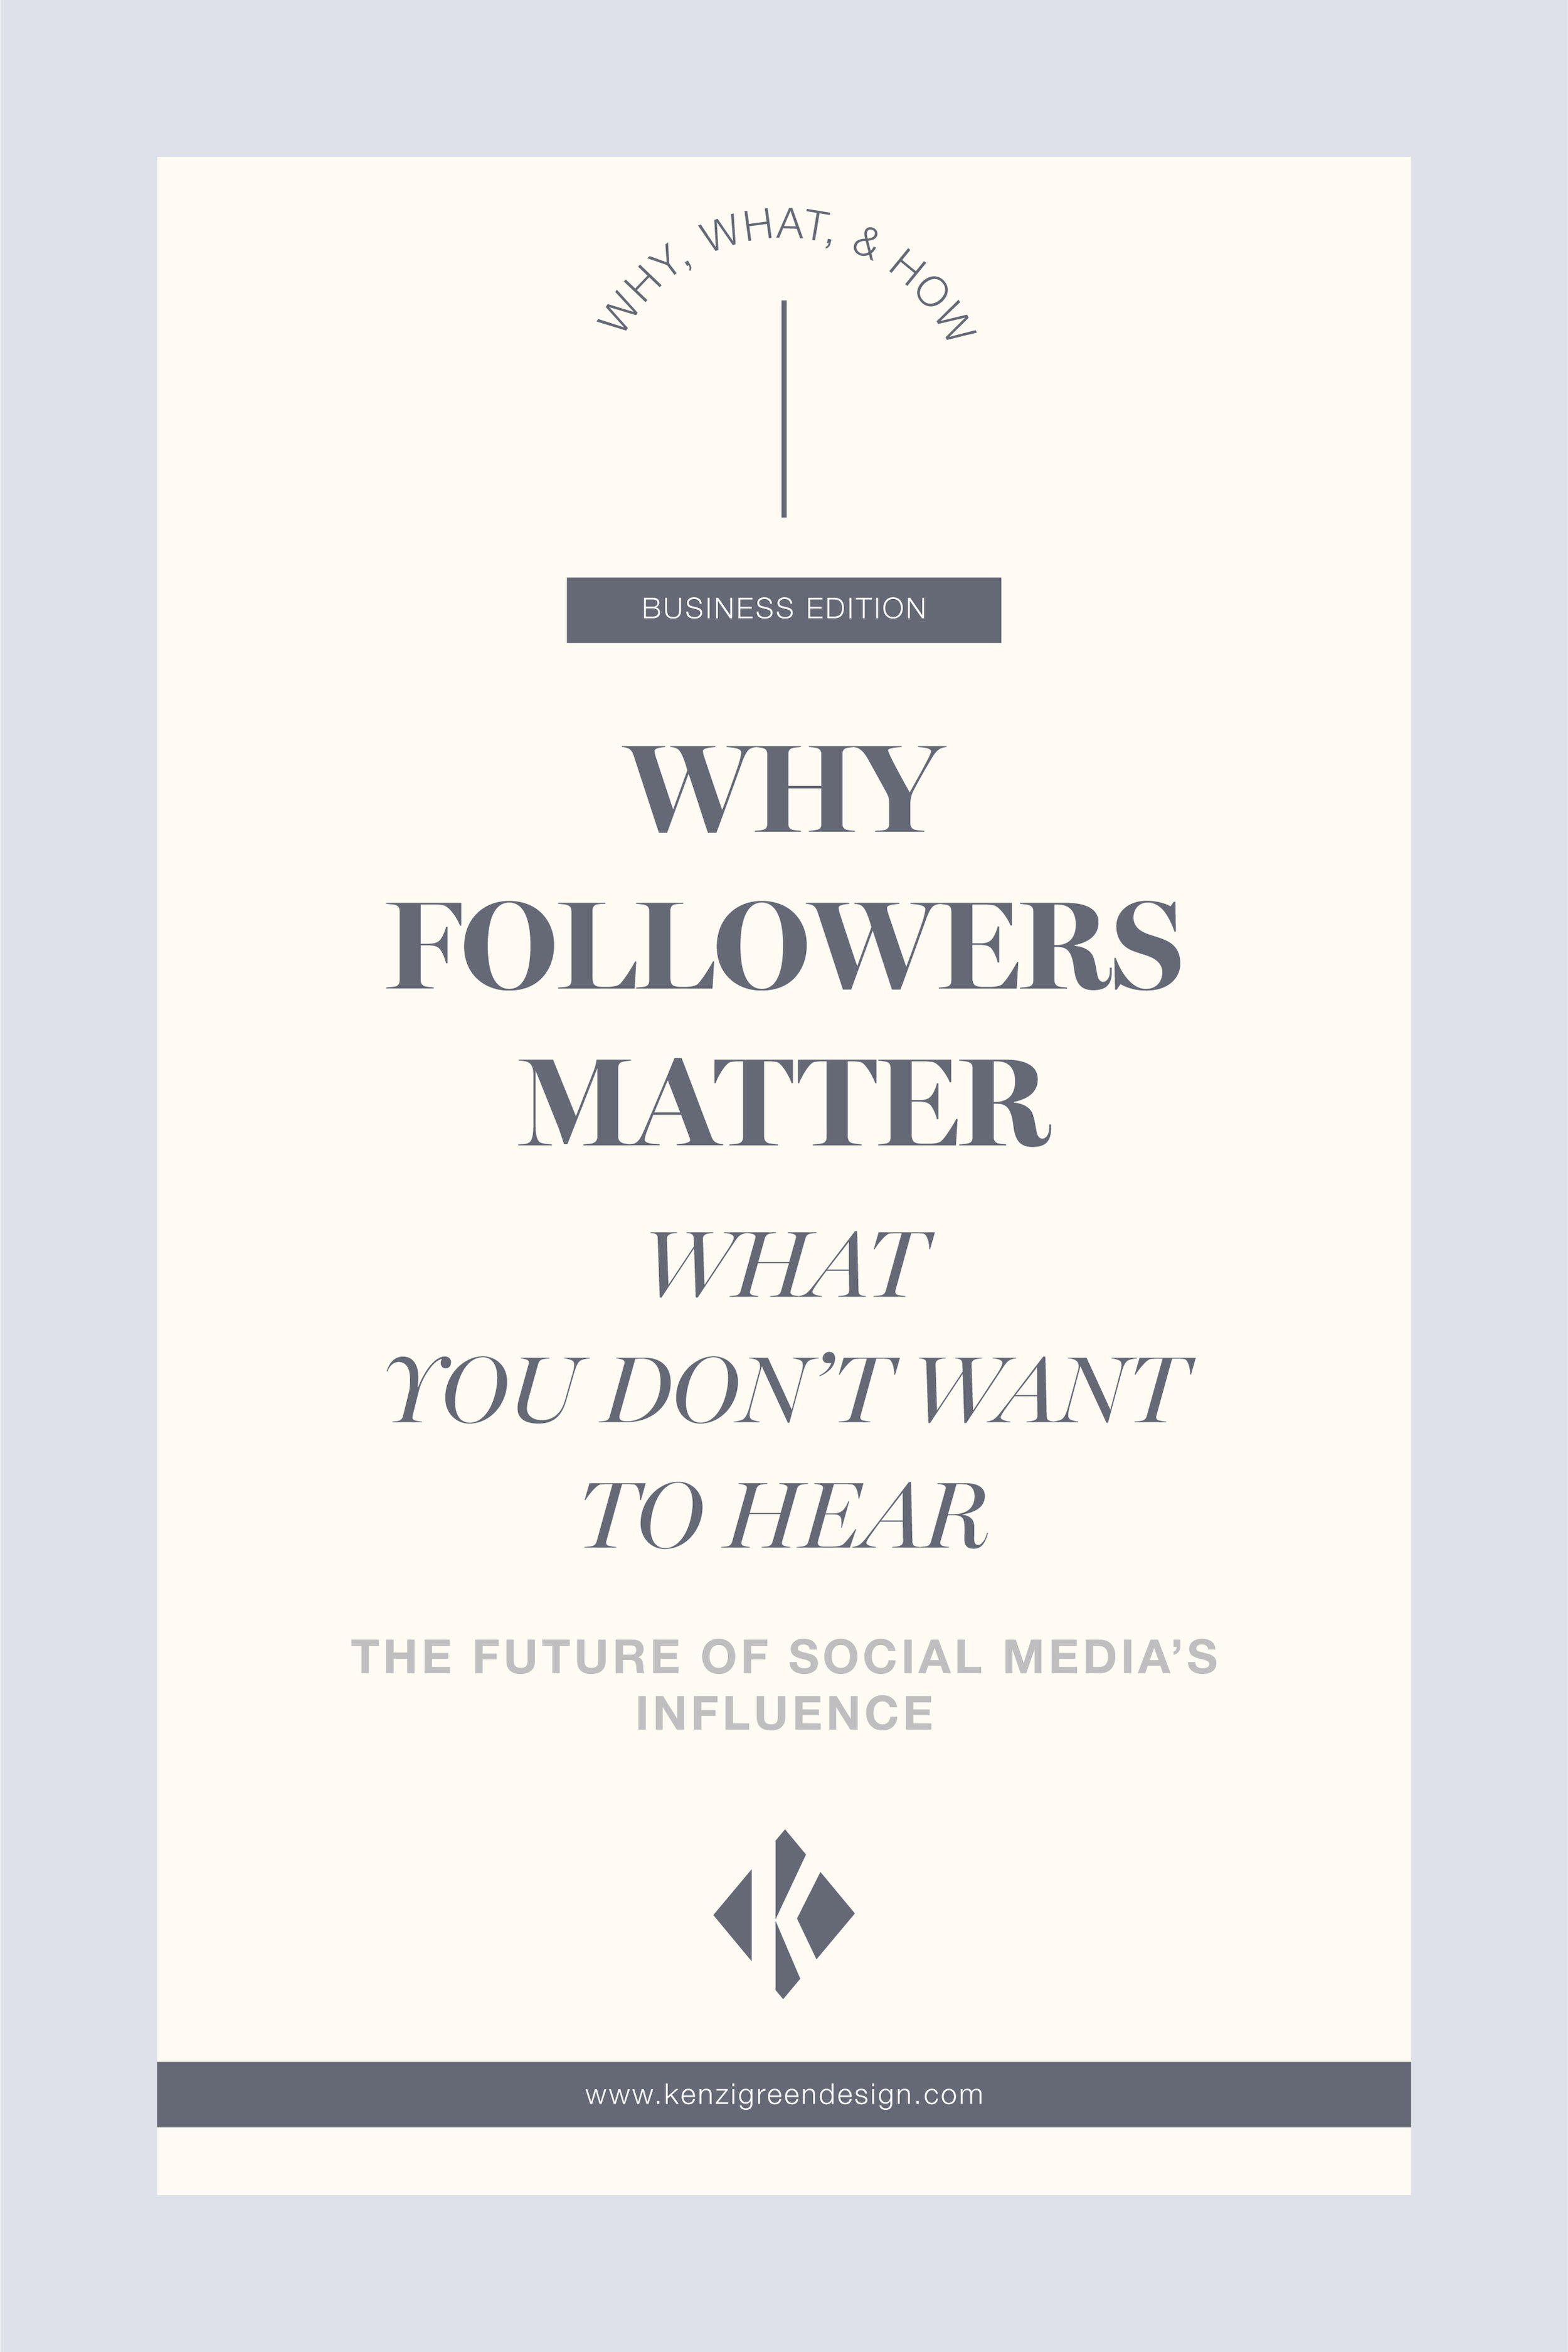 Why Followers Matter (What You Don't Want to Hear) by Kenzi Green Design #socialmedia #instagram #socialmediamarketing